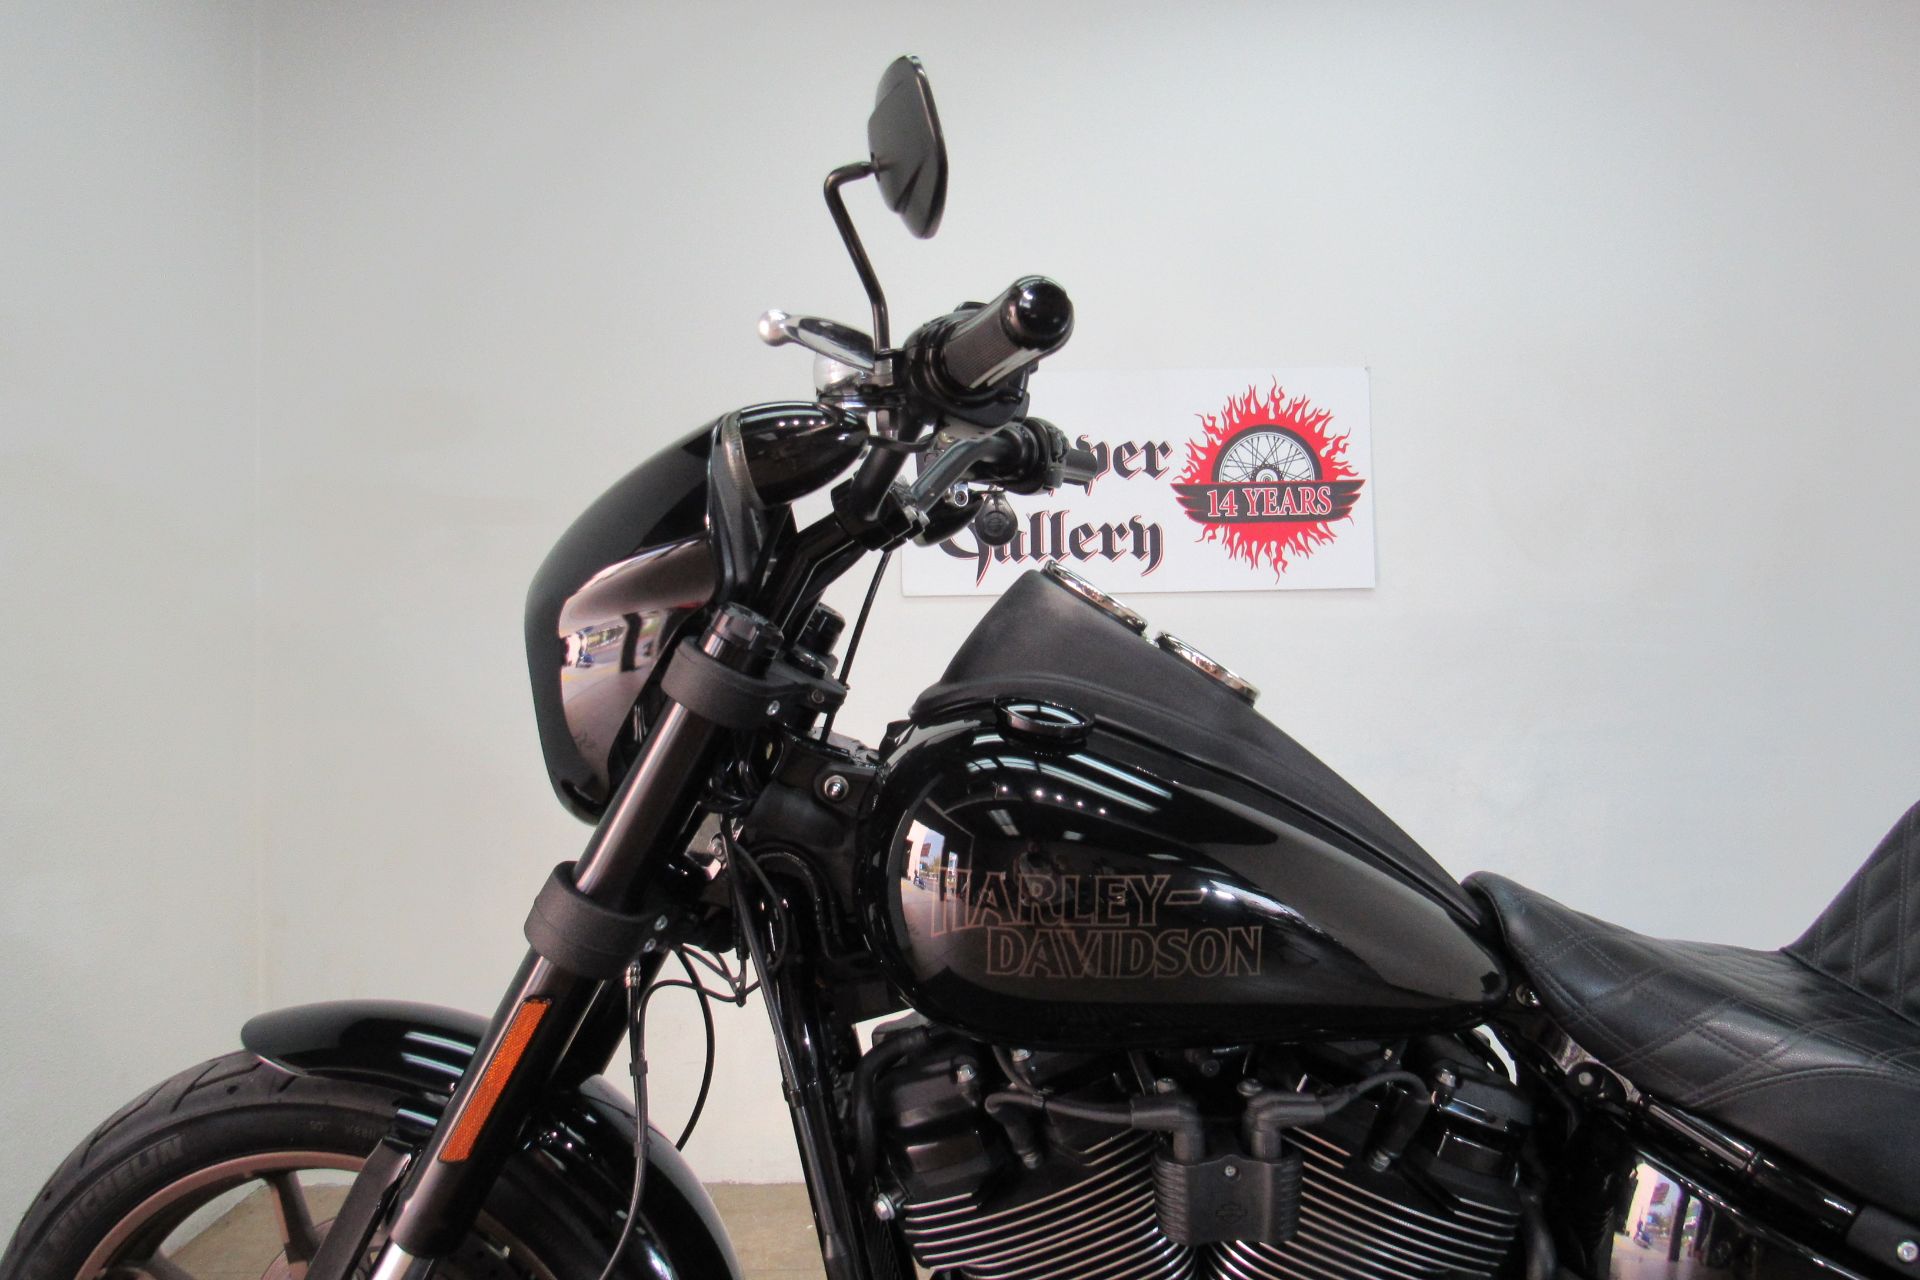 2021 Harley-Davidson Low Rider®S in Temecula, California - Photo 10